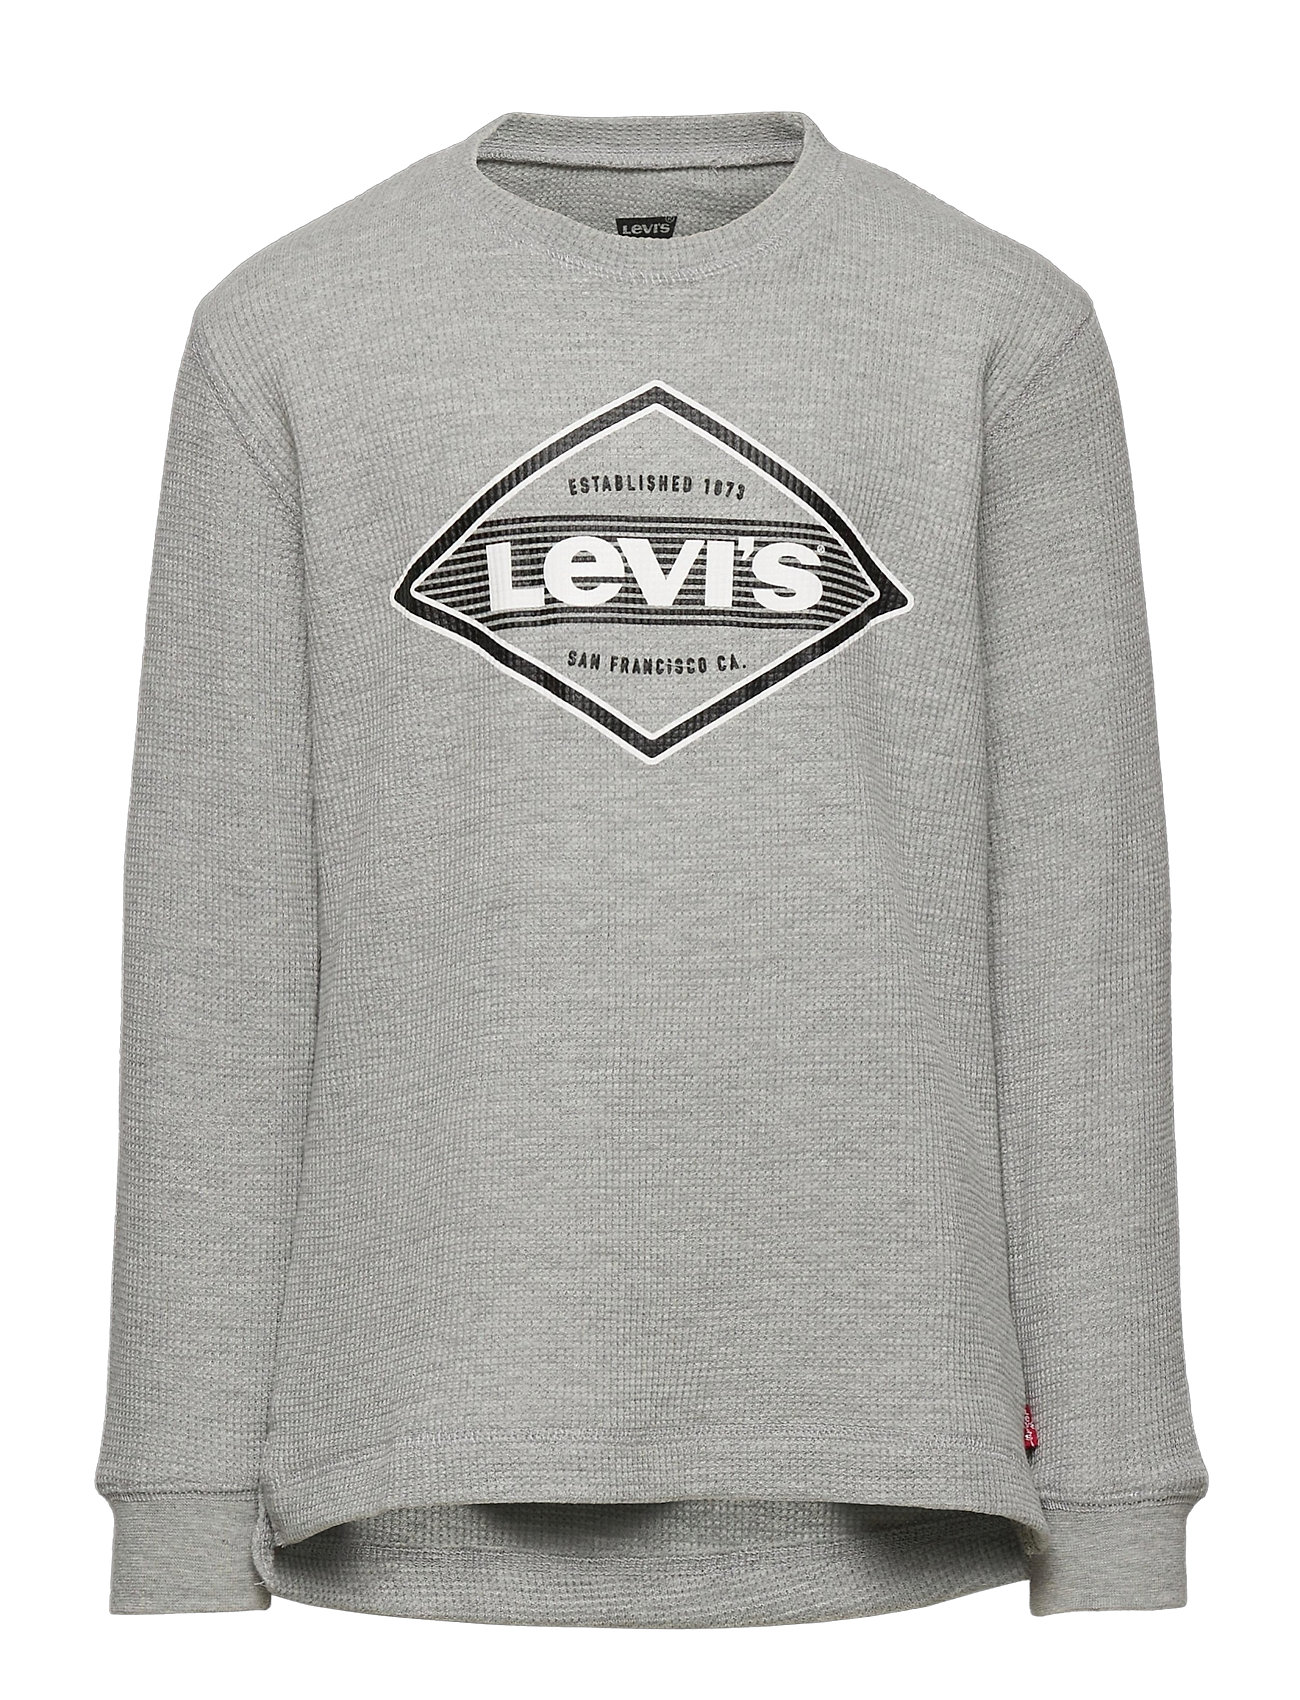 levis thermal wear